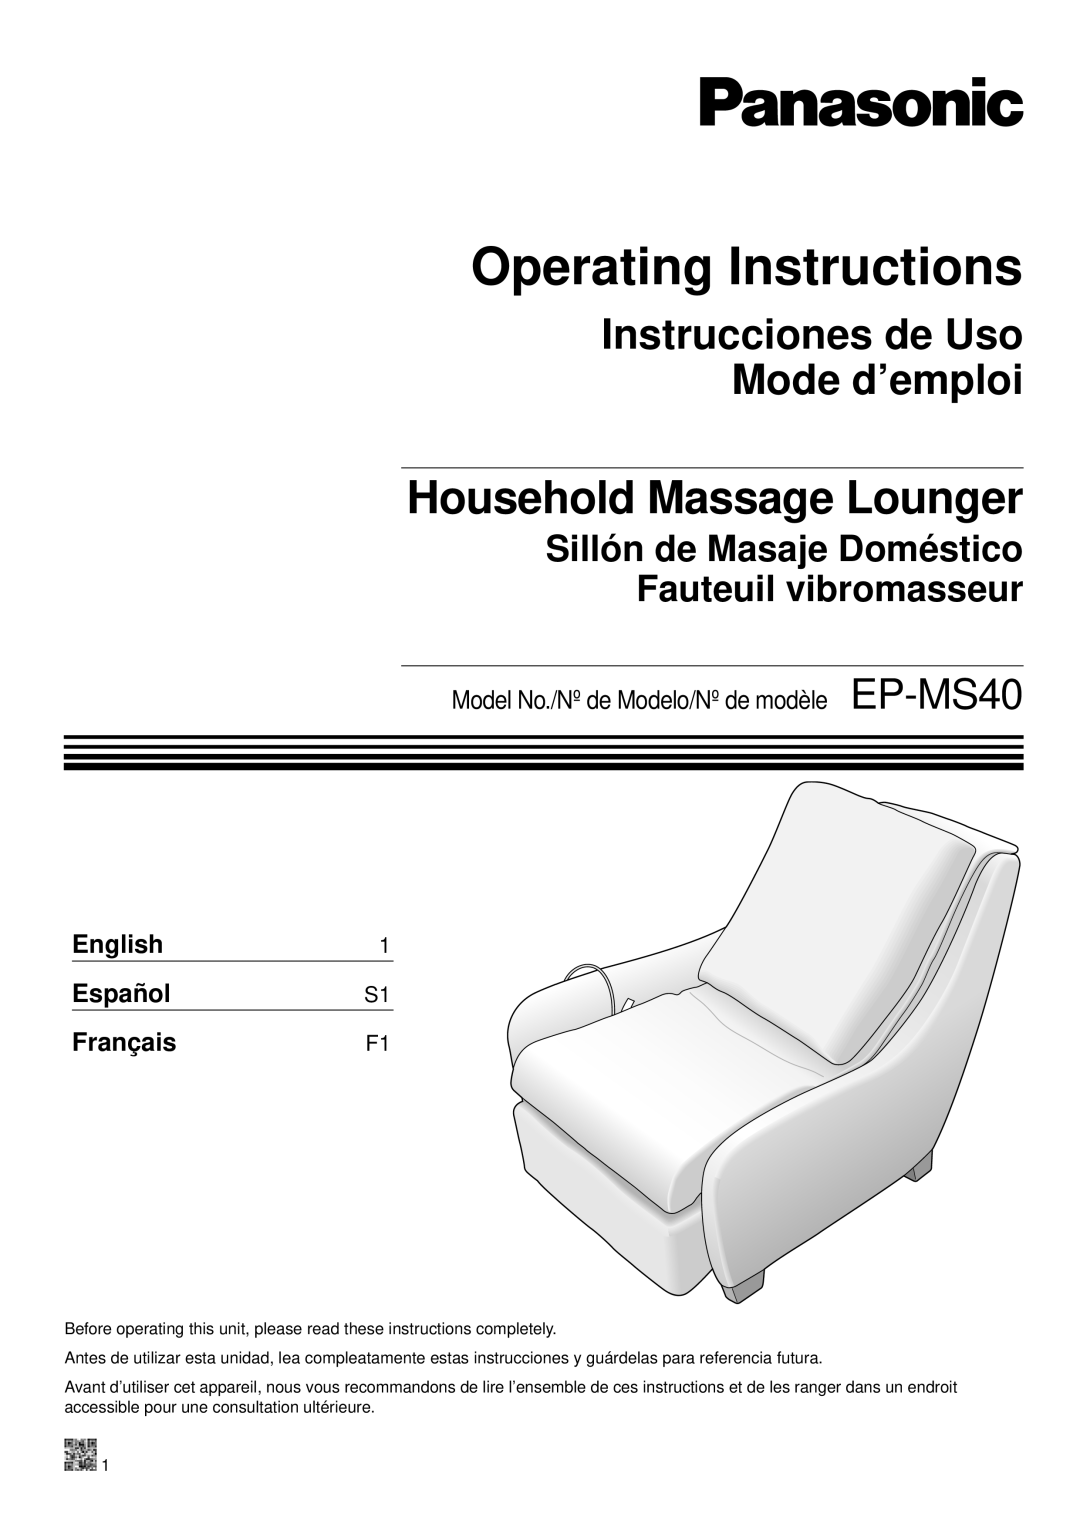 Panasonic EP-MS40 manual Operating Instructions, Household Massage Lounger, Instrucciones de Uso Mode d’emploi, English1 